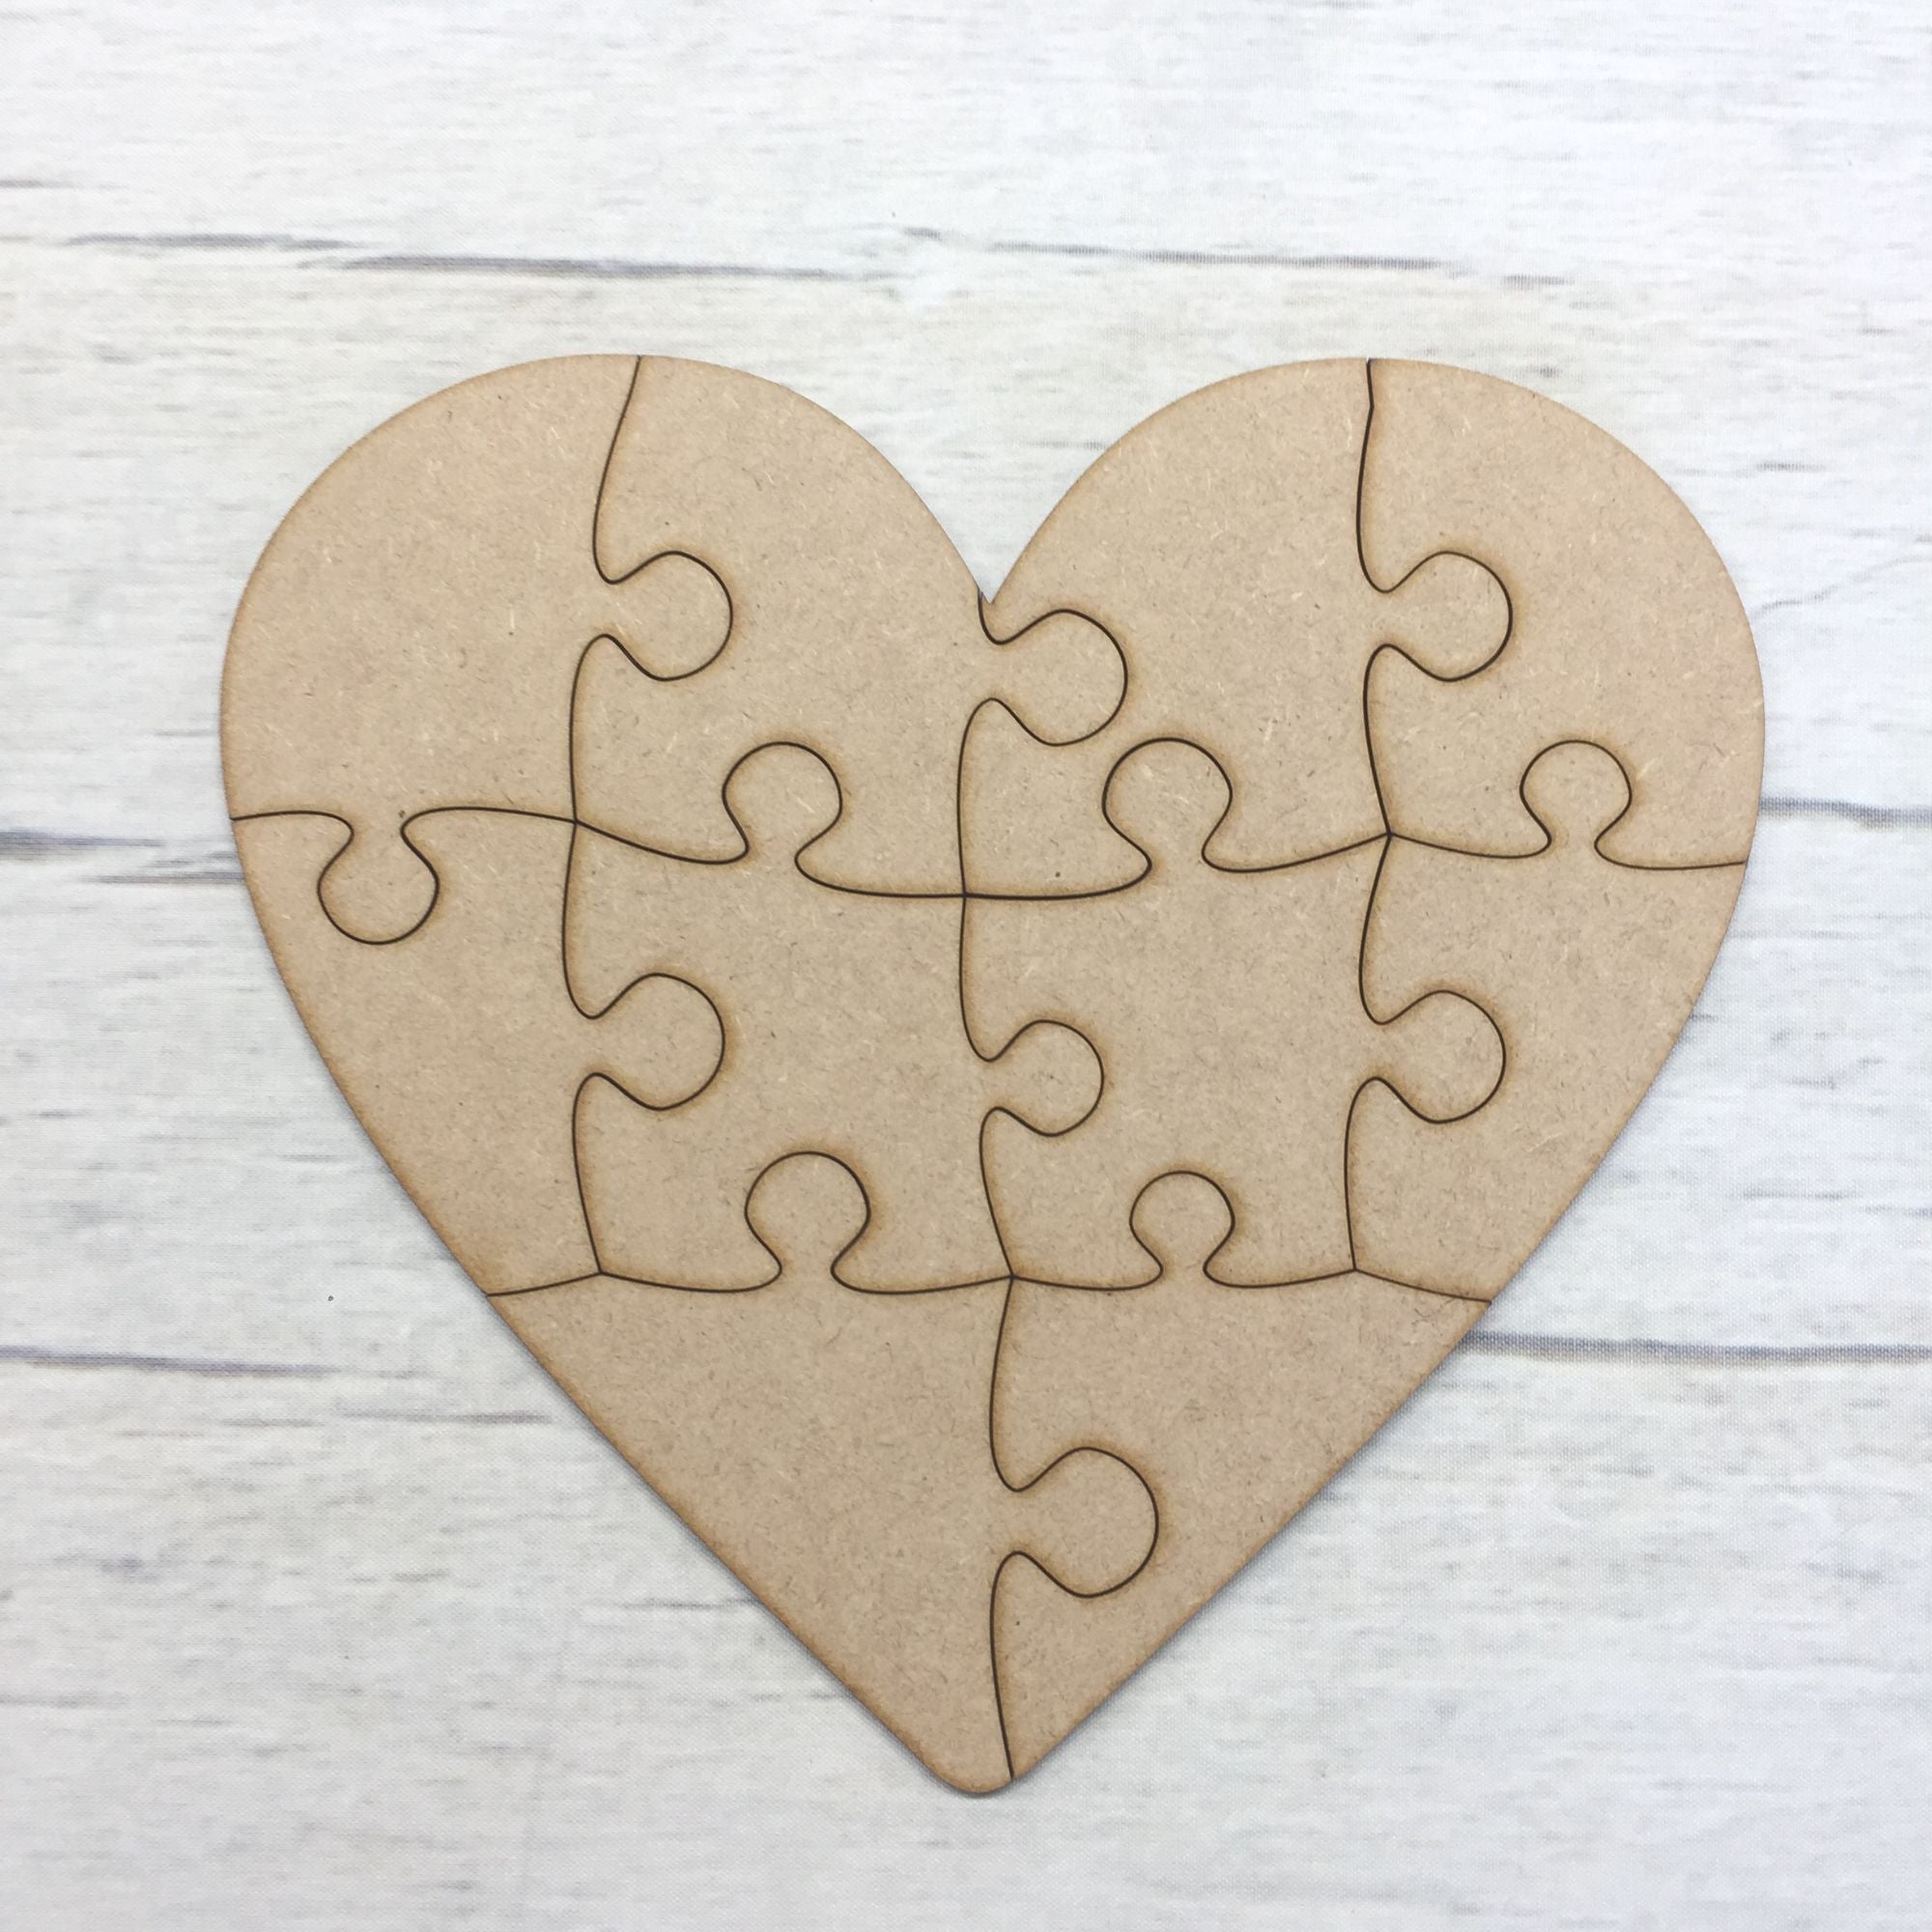 Heart shaped jigsaw - 10 piece